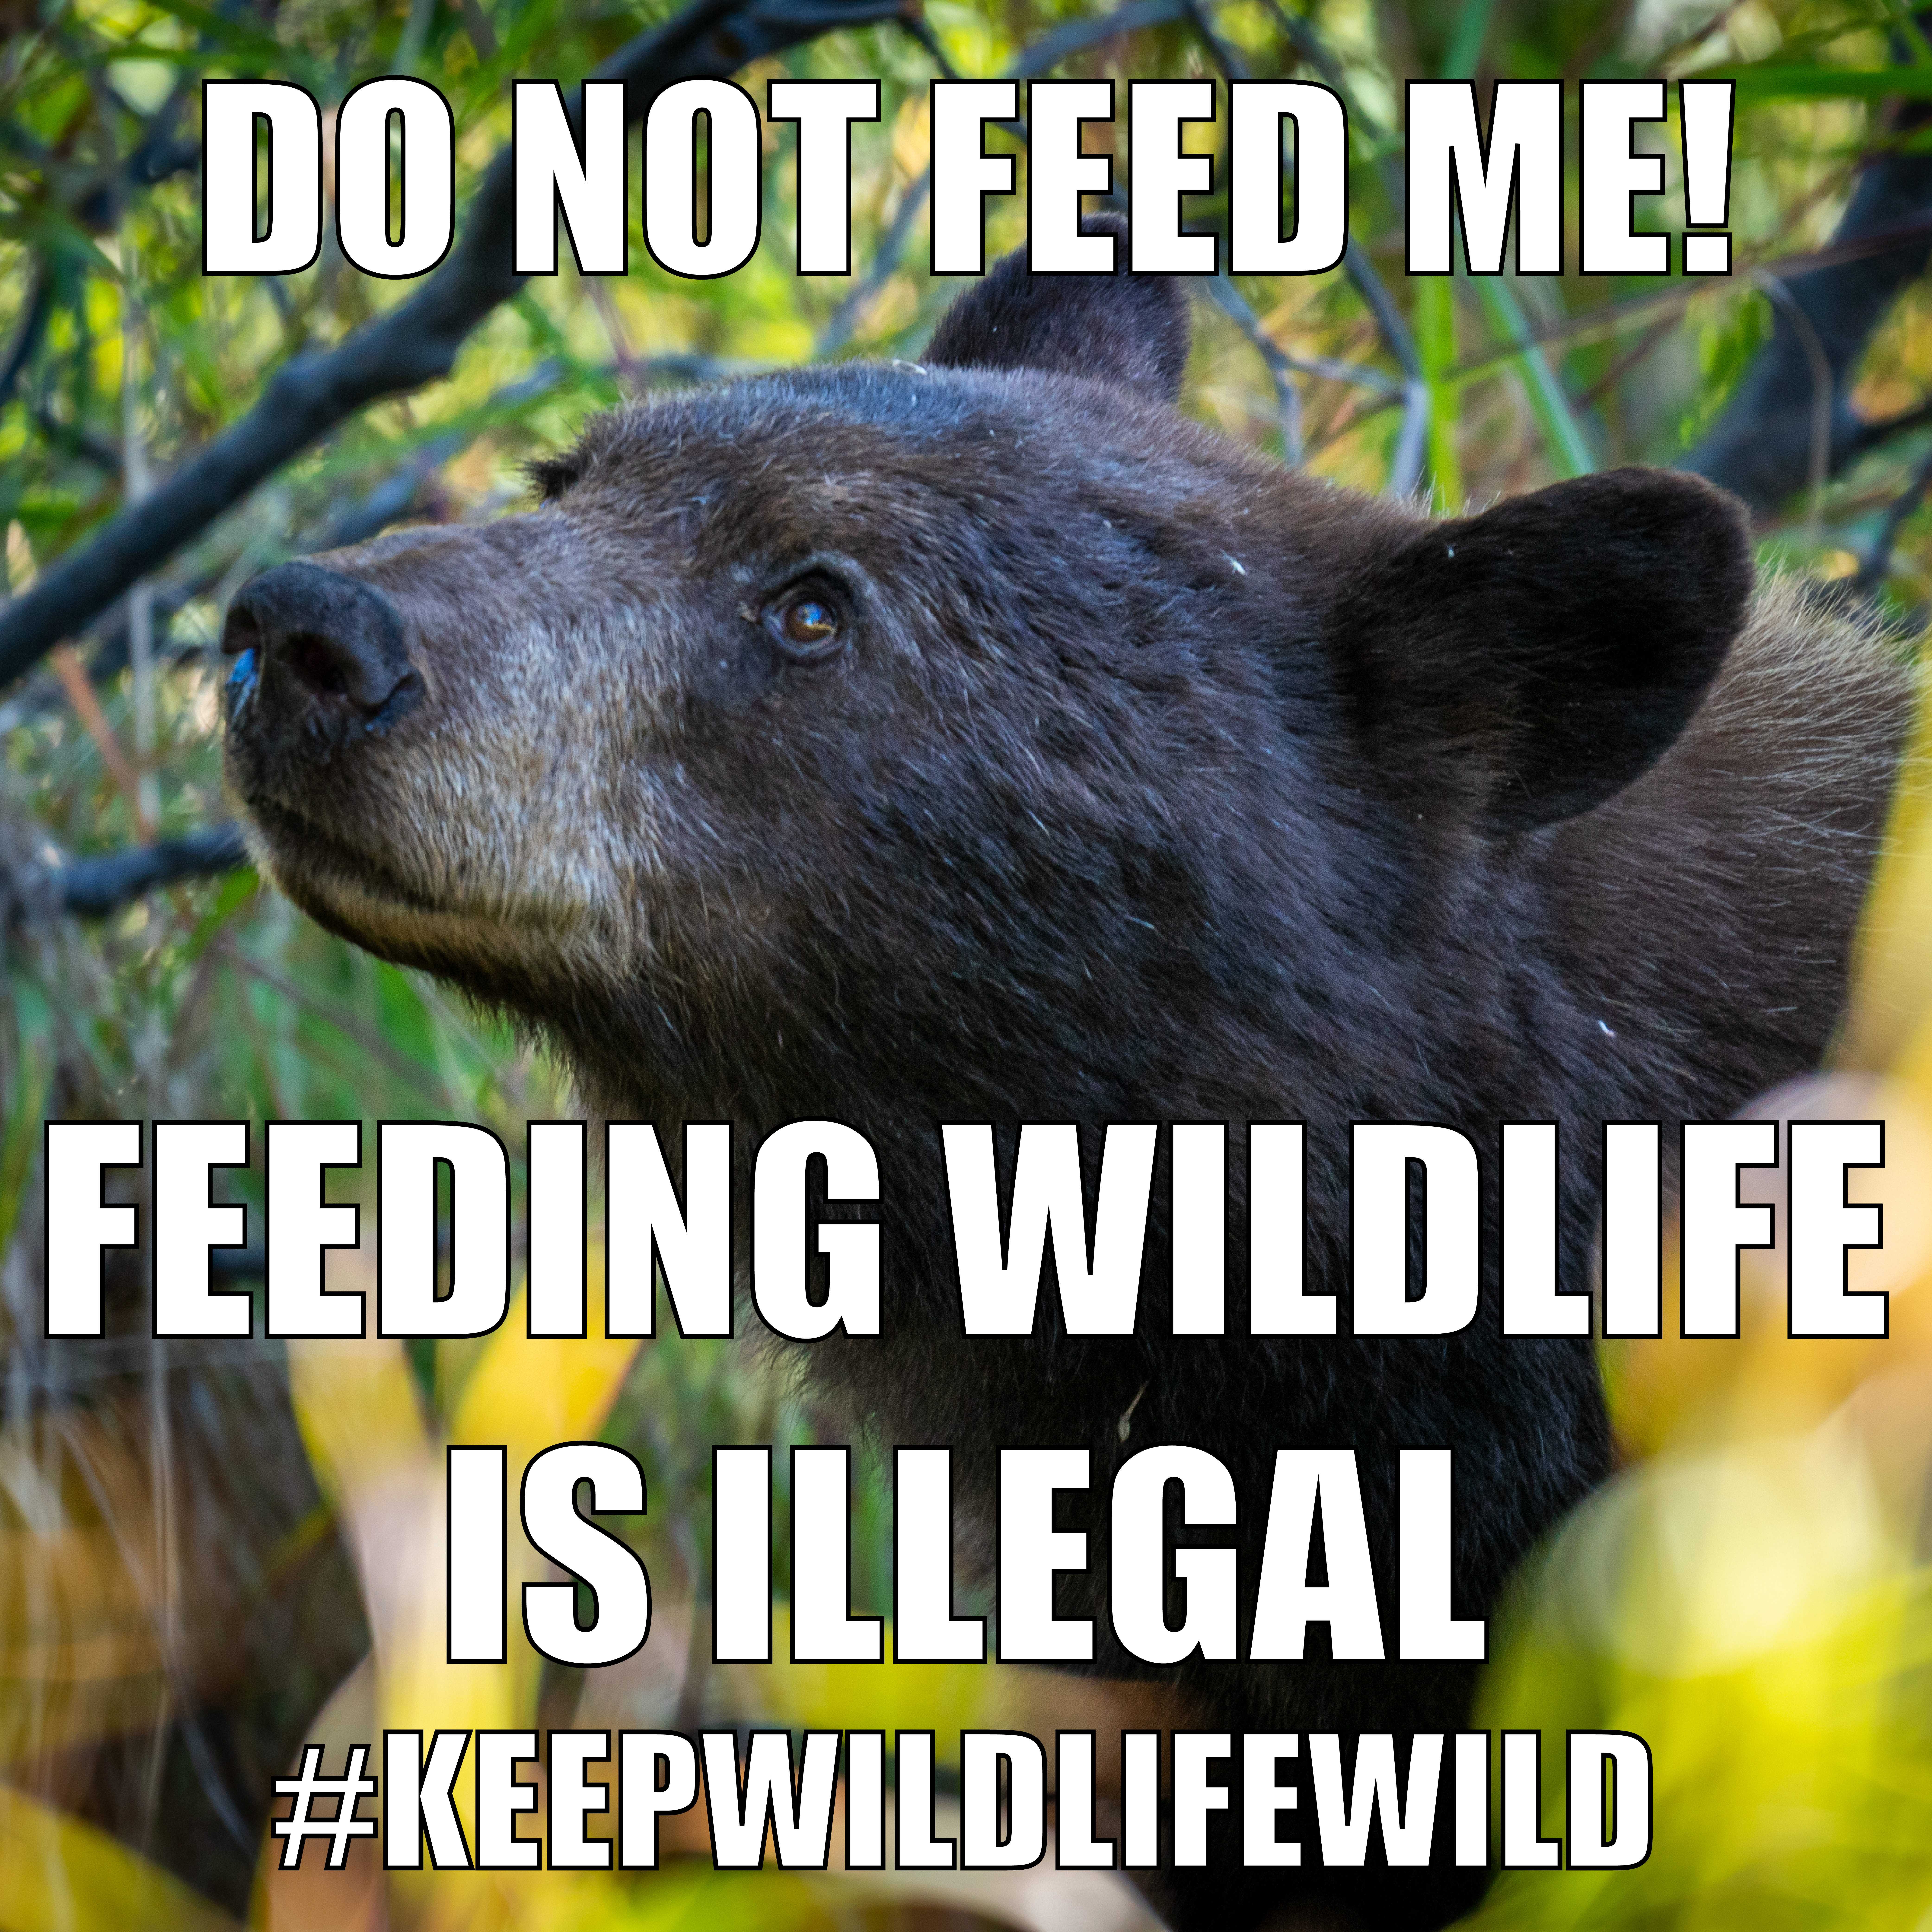 Feeding Wildlife is Illegal, Black Bear Meme photo image